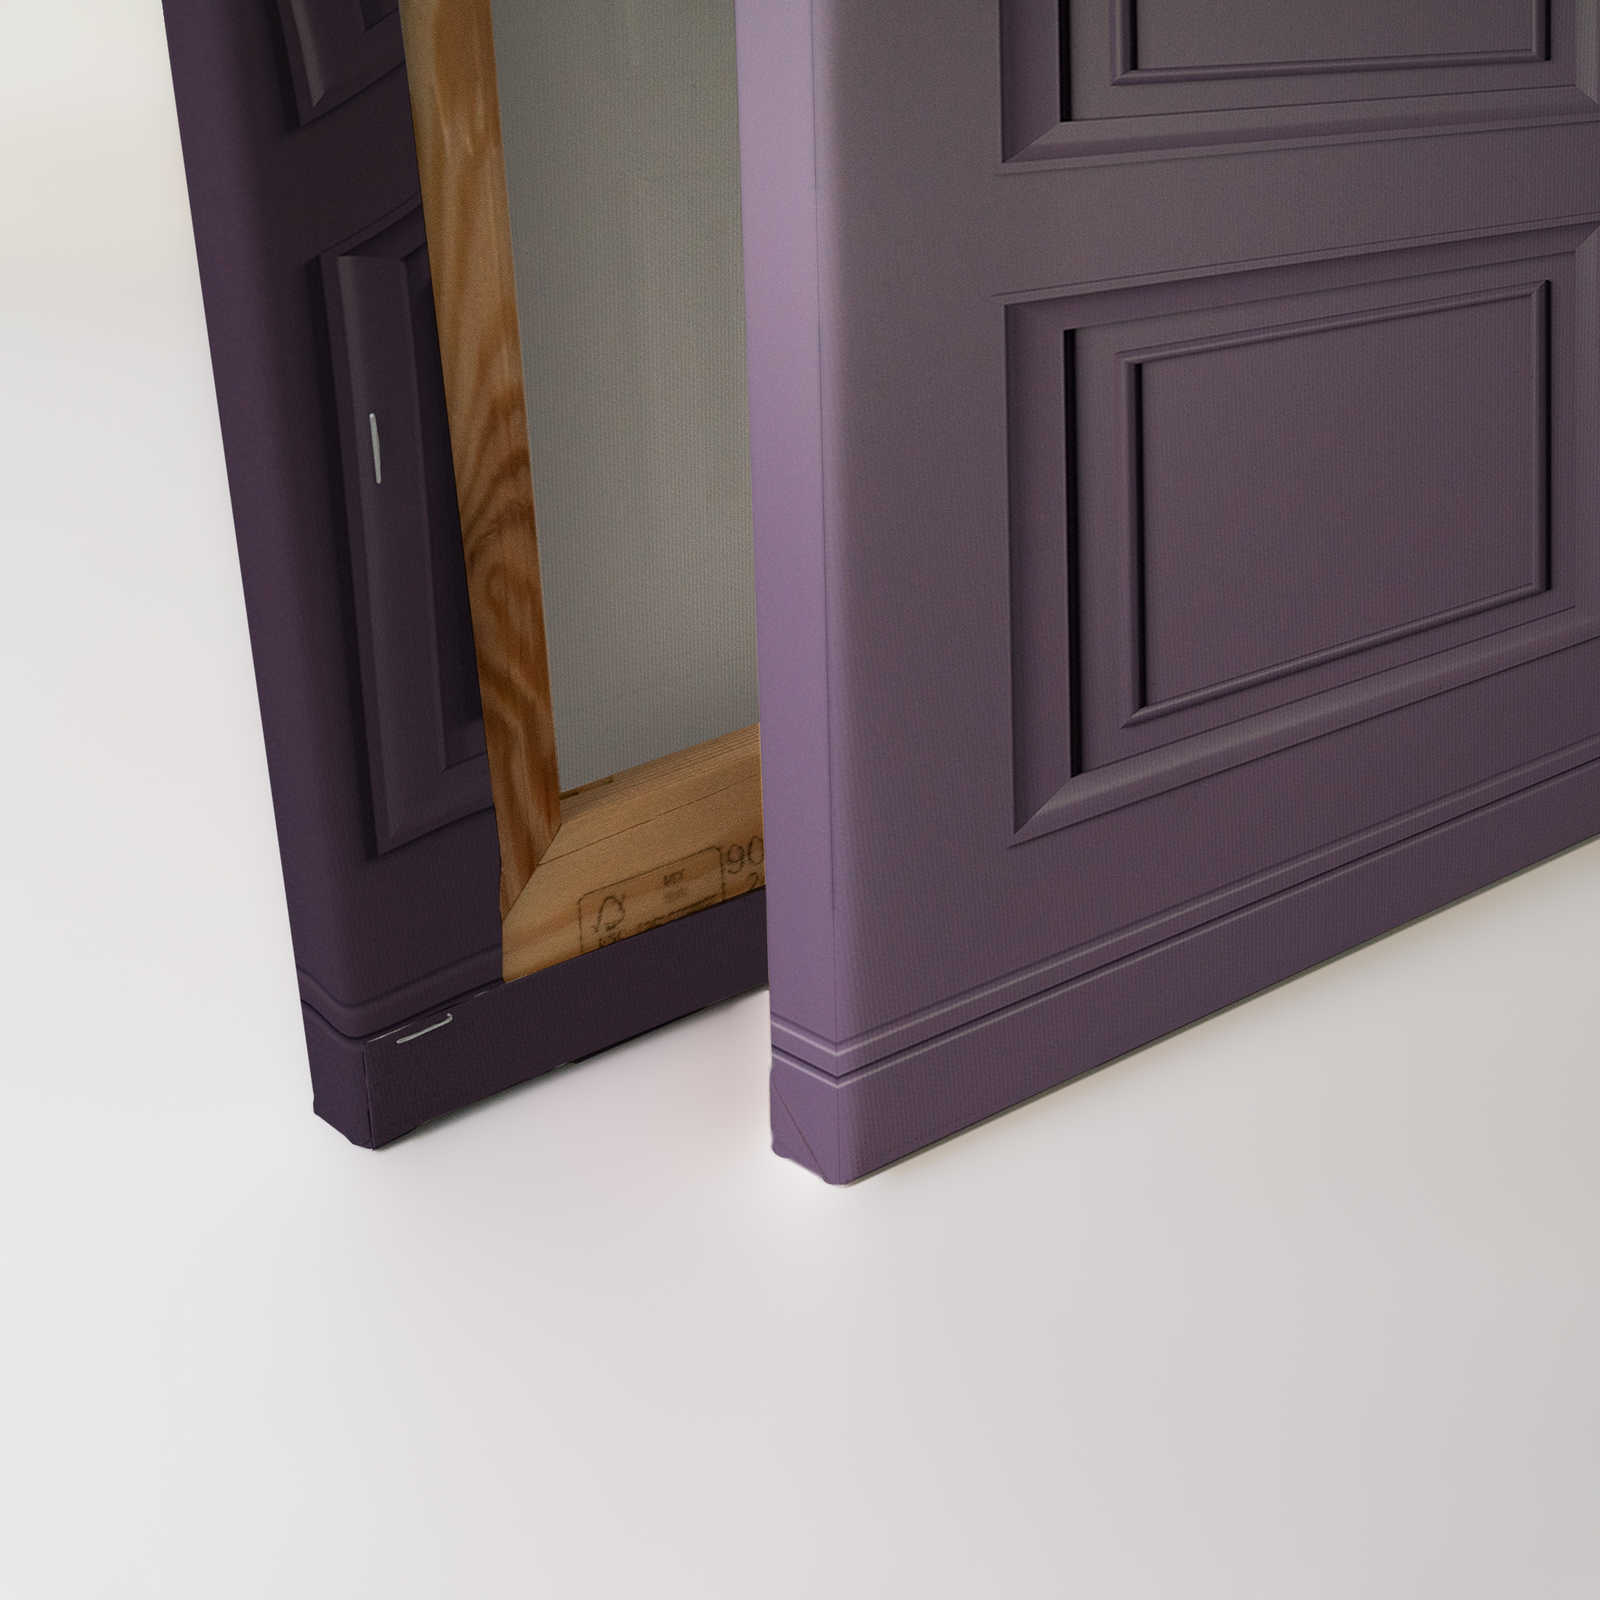             Kensington 3 - 3D Leinwandbild Holzvertäfelung dunkles Lila, Violett – 1,20 m x 0,80 m
        